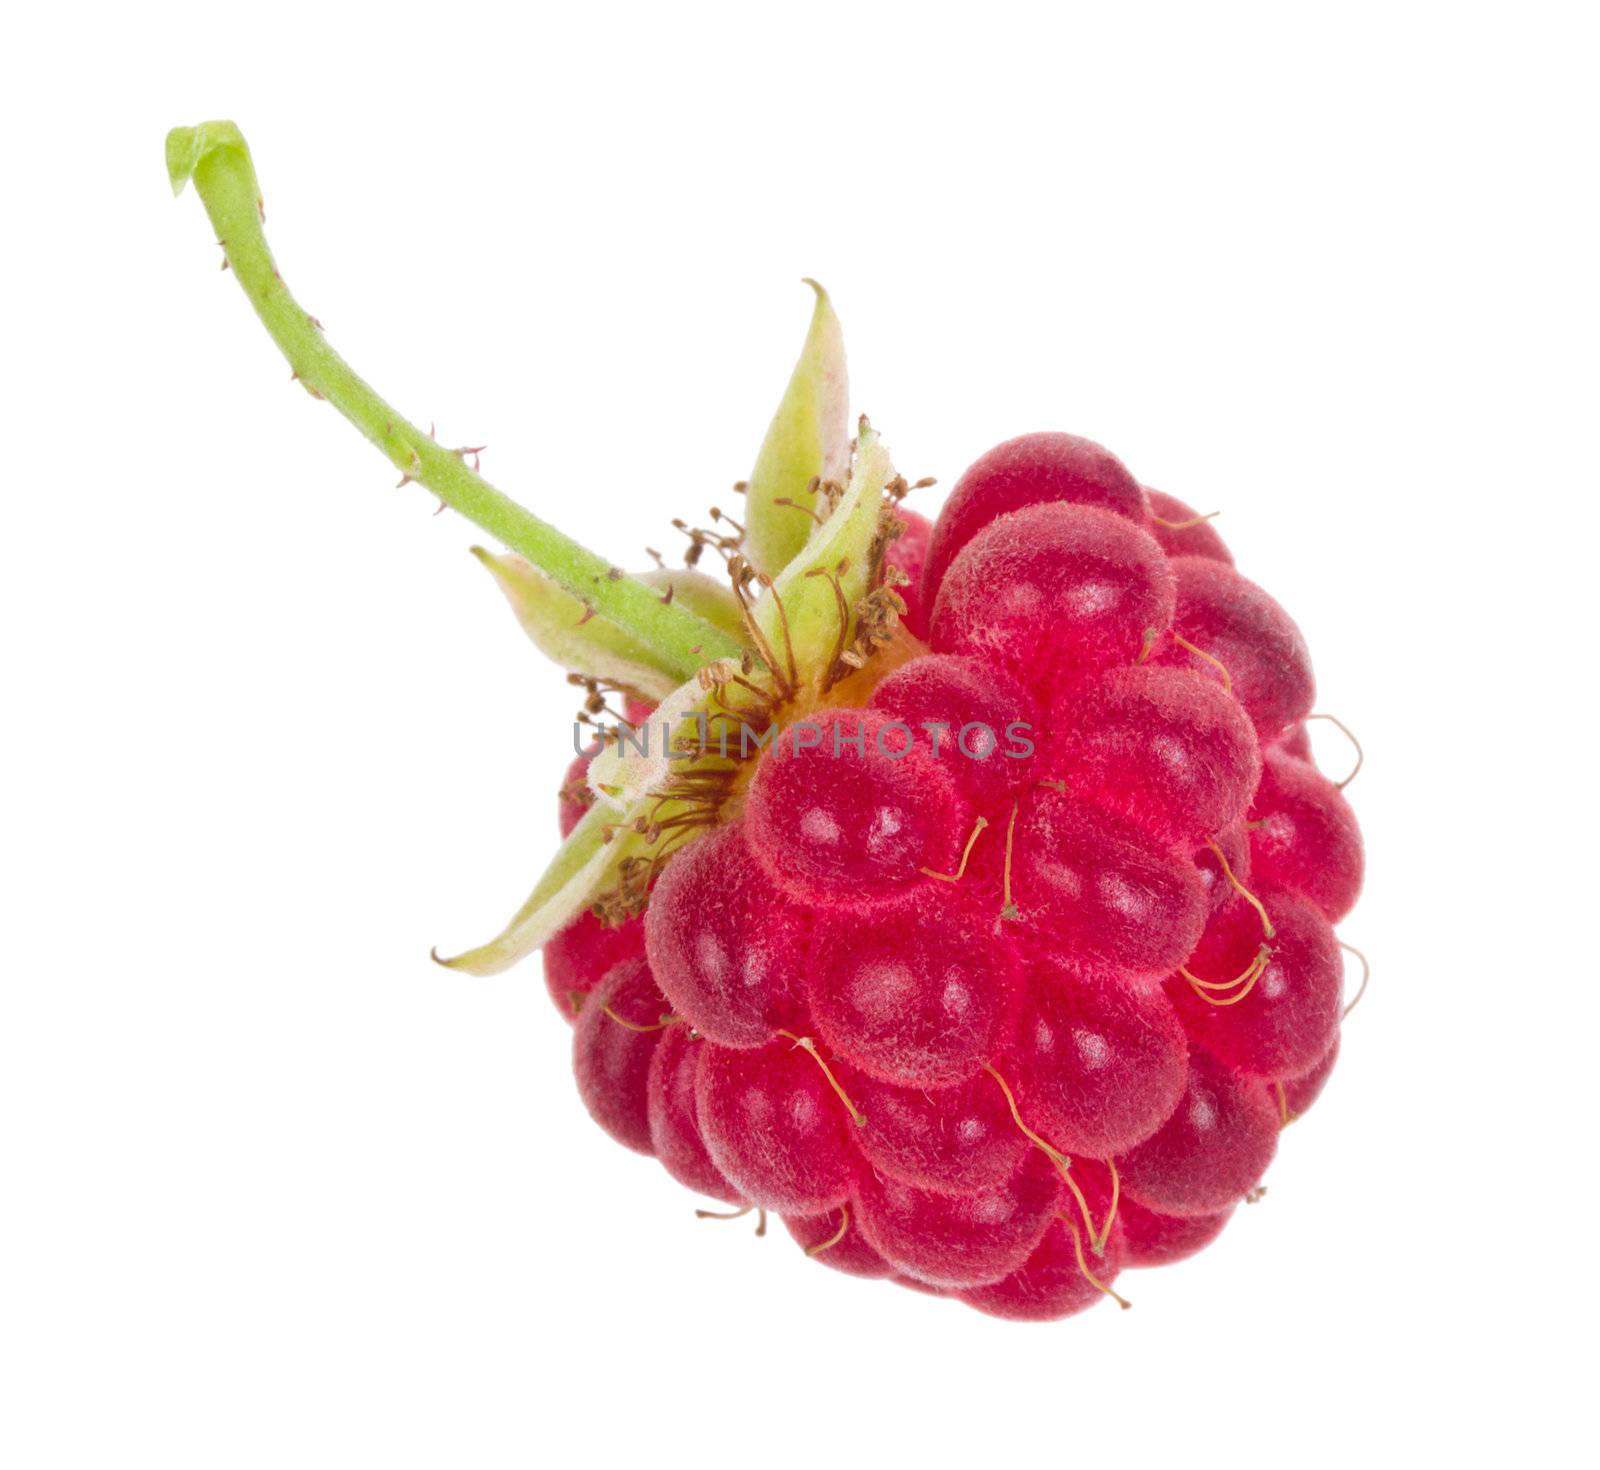 single ripe raspberry by Alekcey